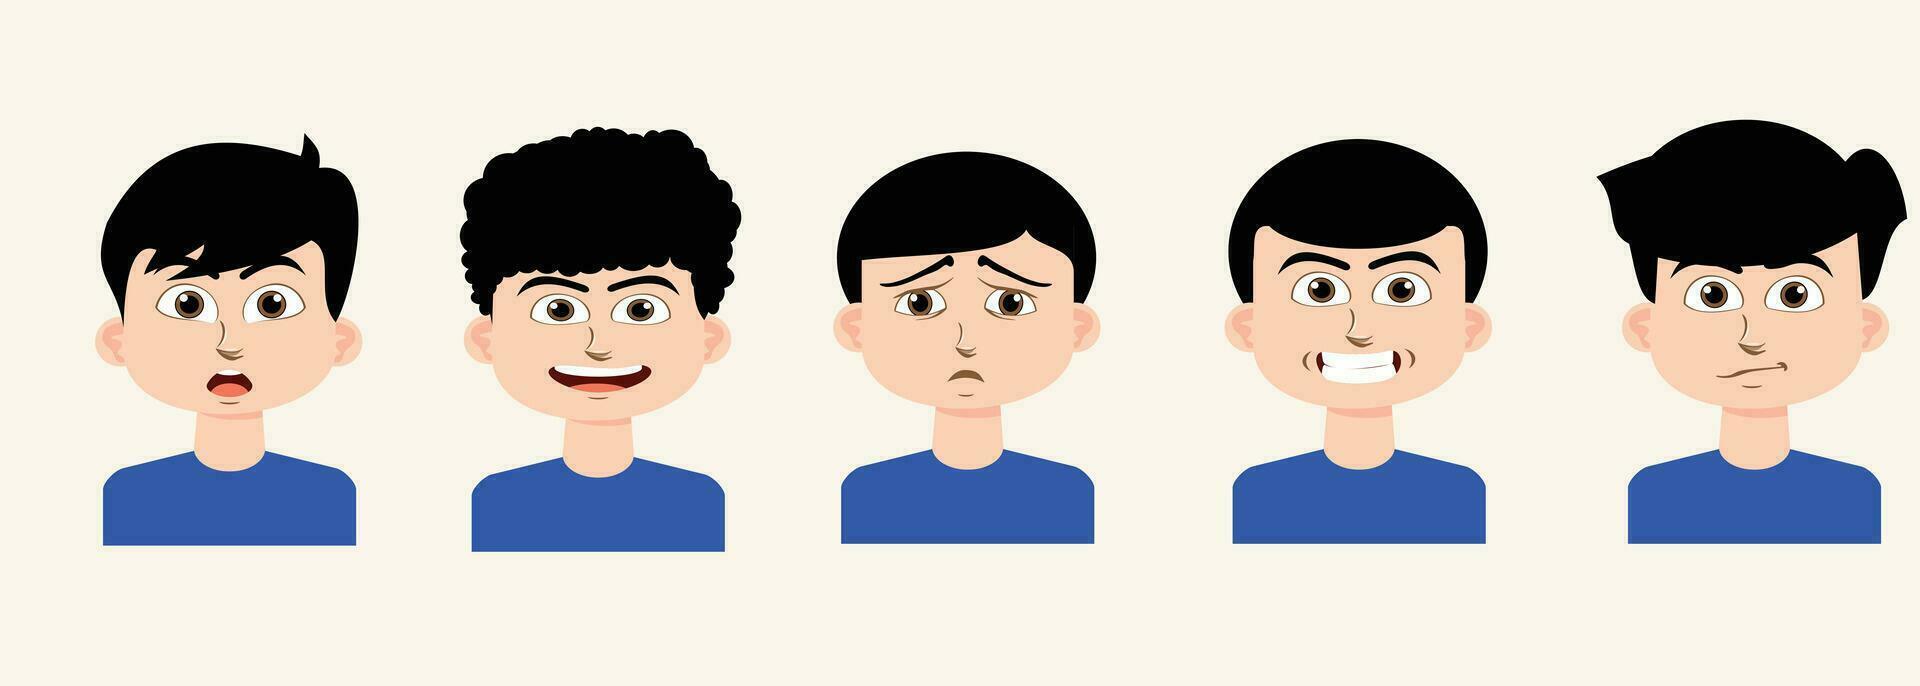 Set of kids emotions. facial expressions. Cartoon boy avatars. vector